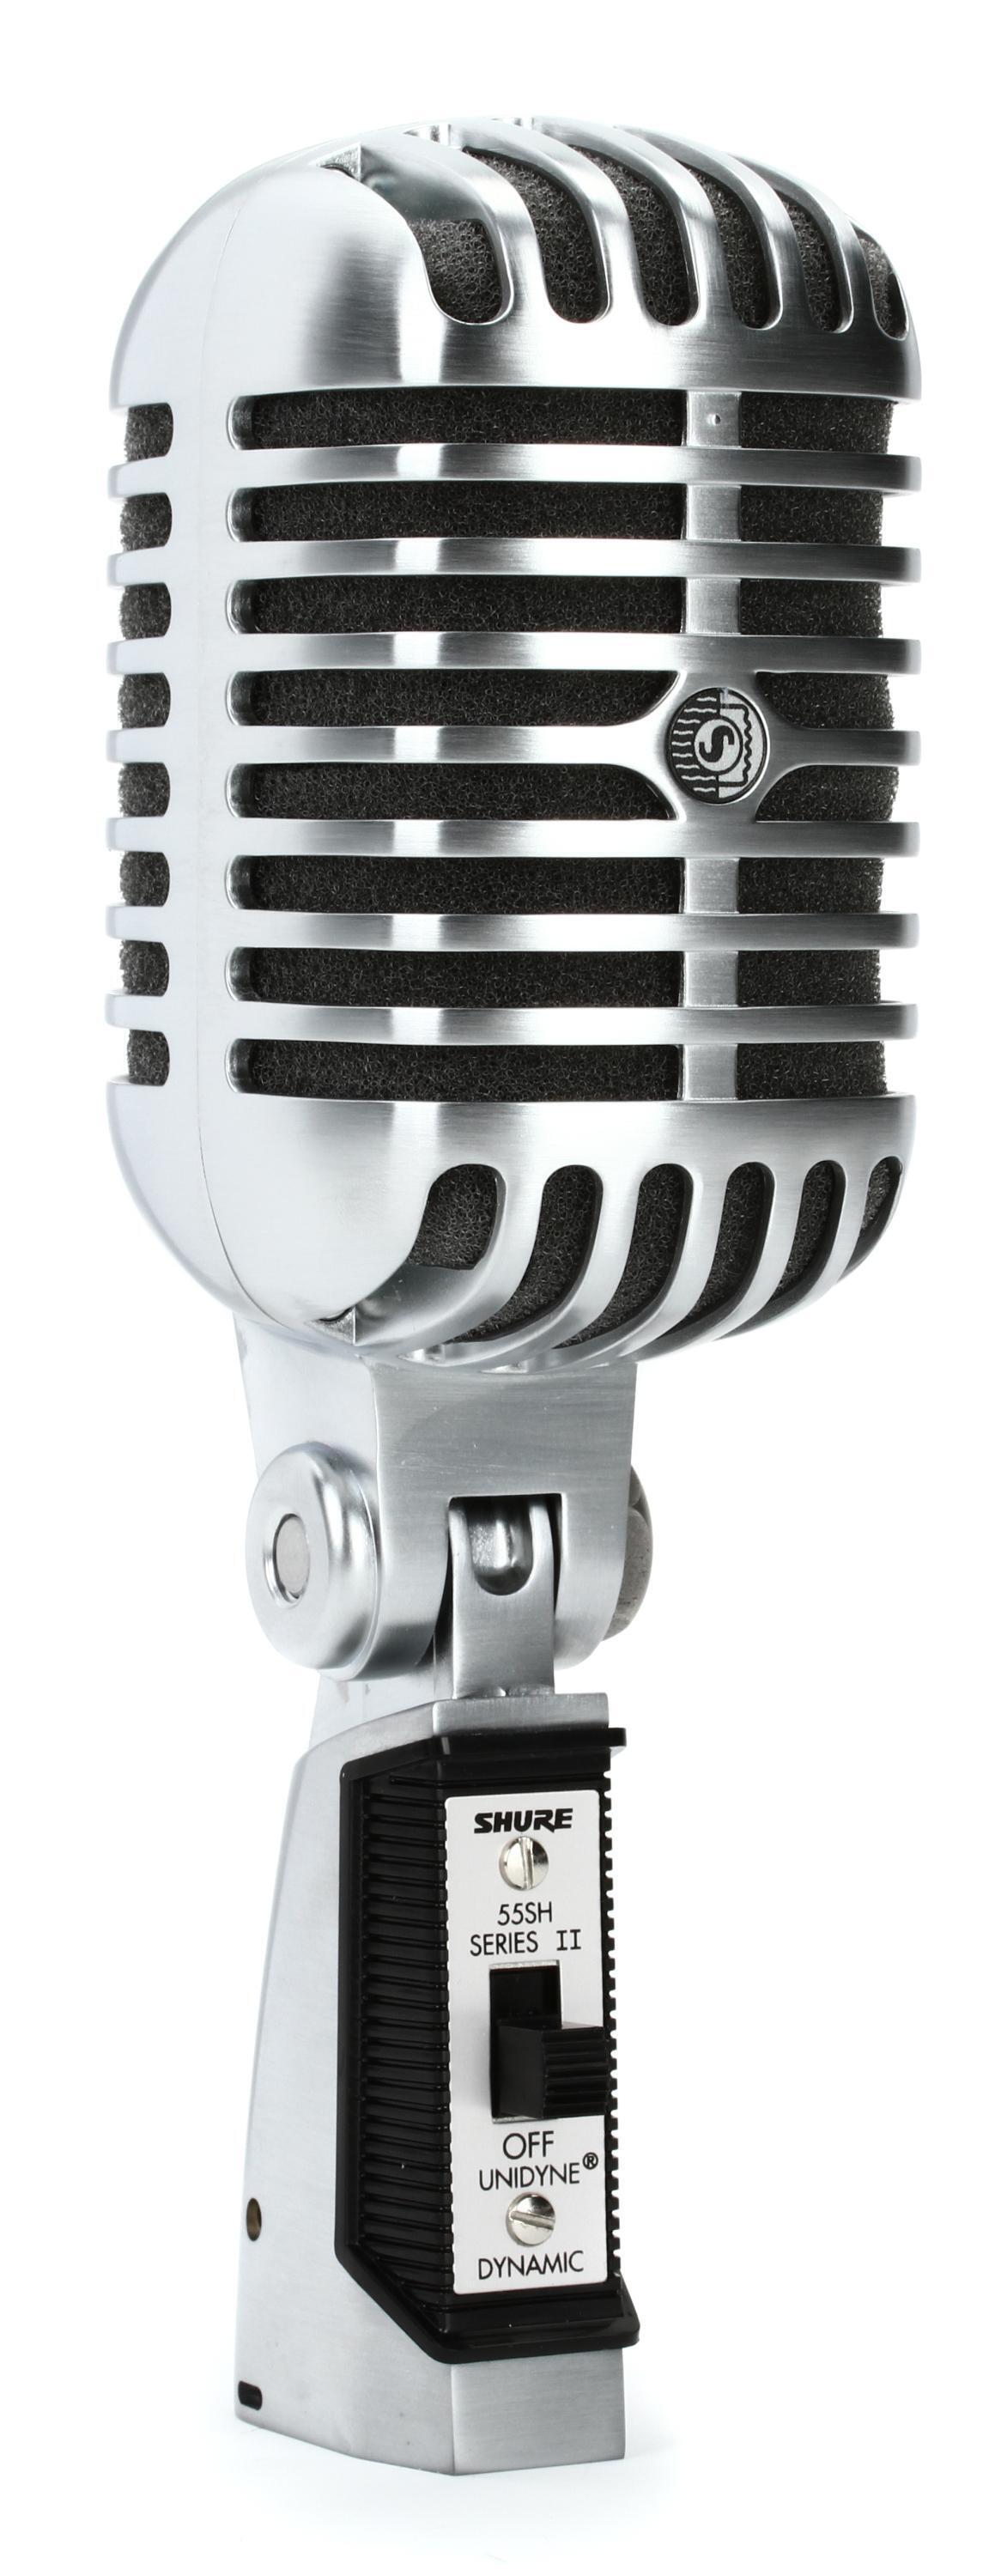 Bundled Item: Shure 55SH Series II Cardioid Dynamic Vocal Microphone